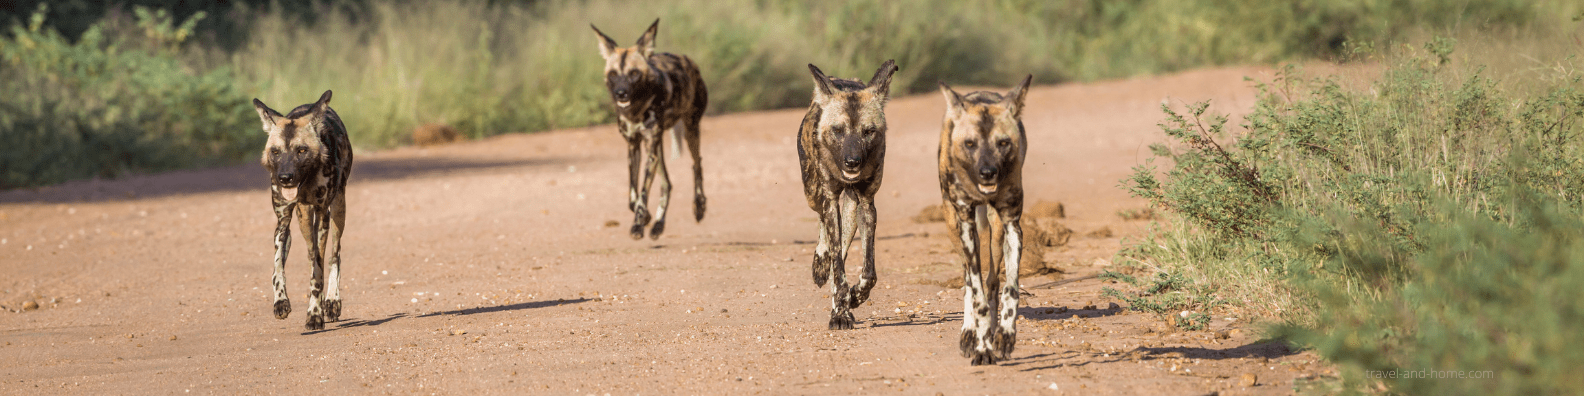 Kruger National Park wild dogs safari bush game reserve south africa tour